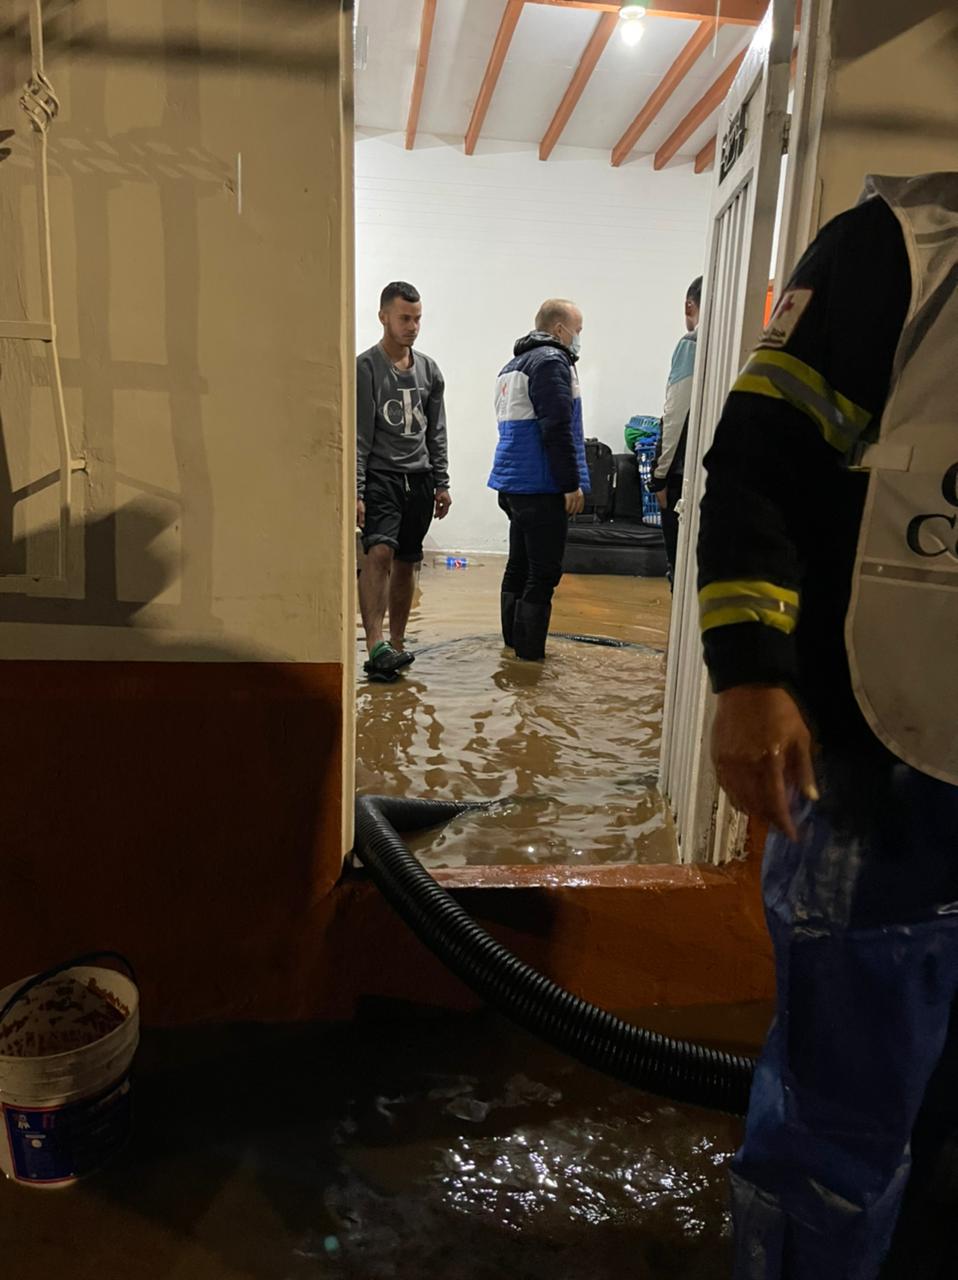 “Lluvias registran niveles históricos”: Alcaldía de La Ceja tras emergencias por aguaceros